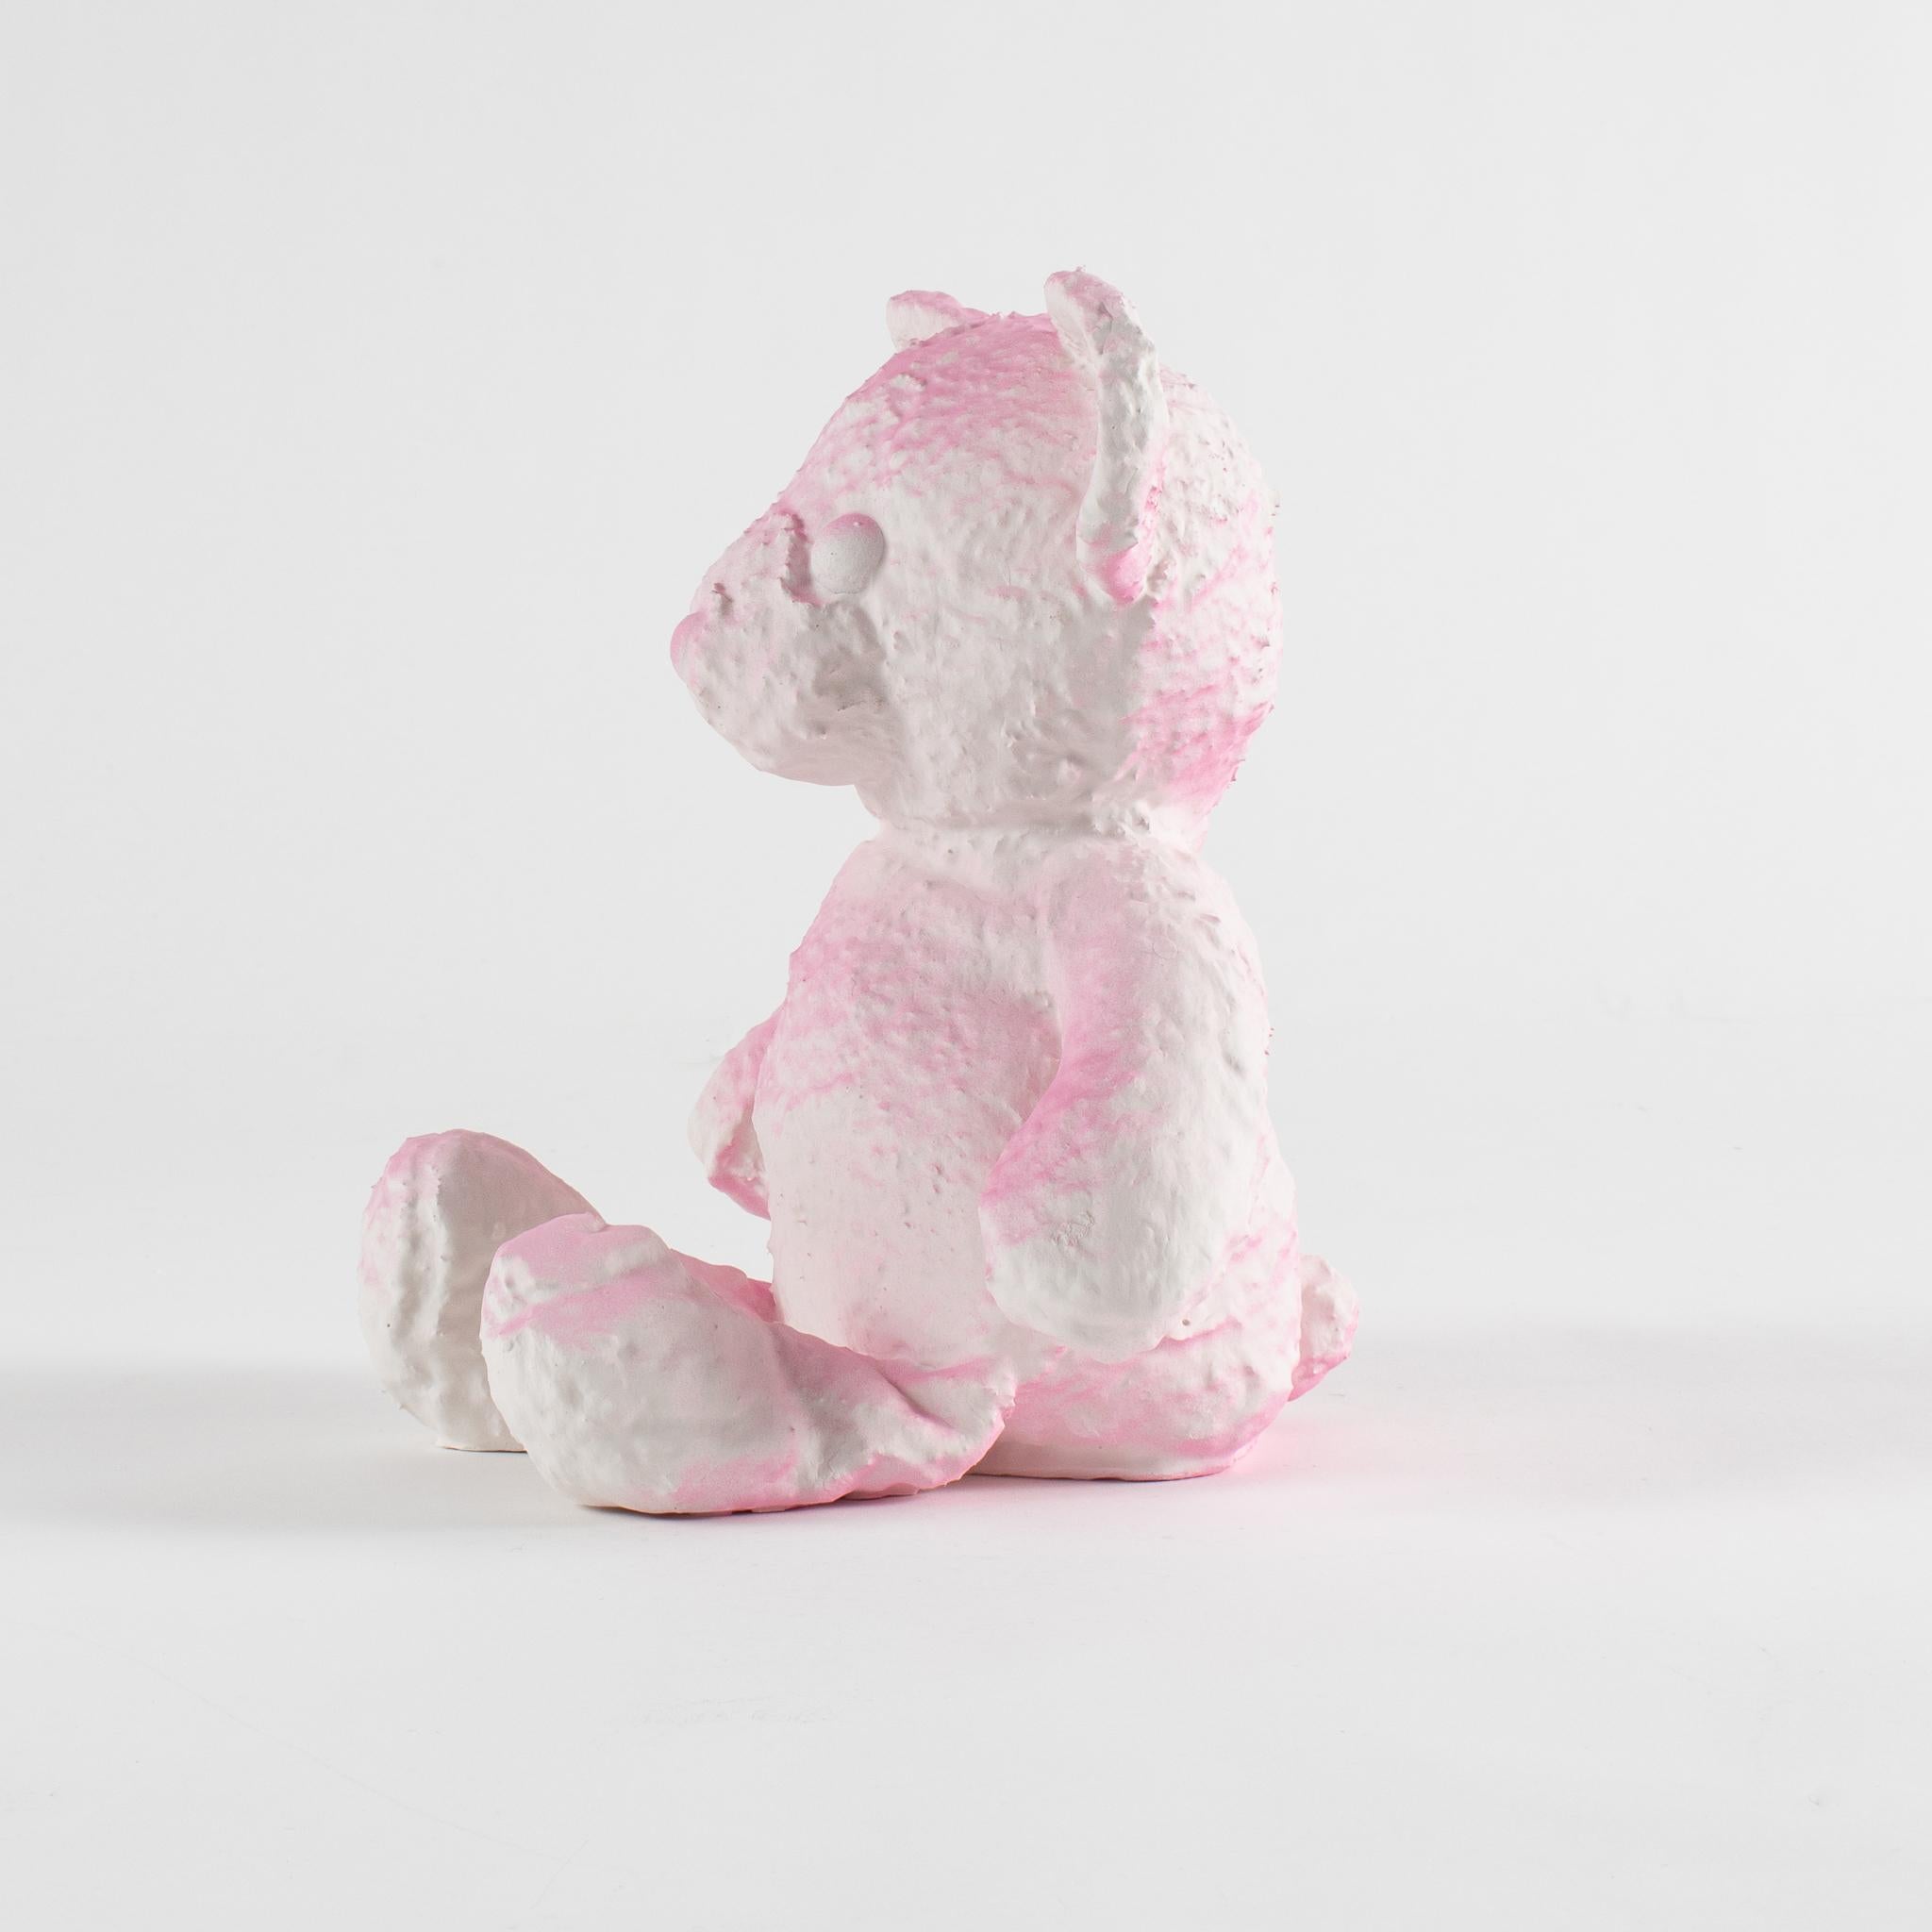 Cracked Bear (Pink) - Sculpture by Daniel Arsham